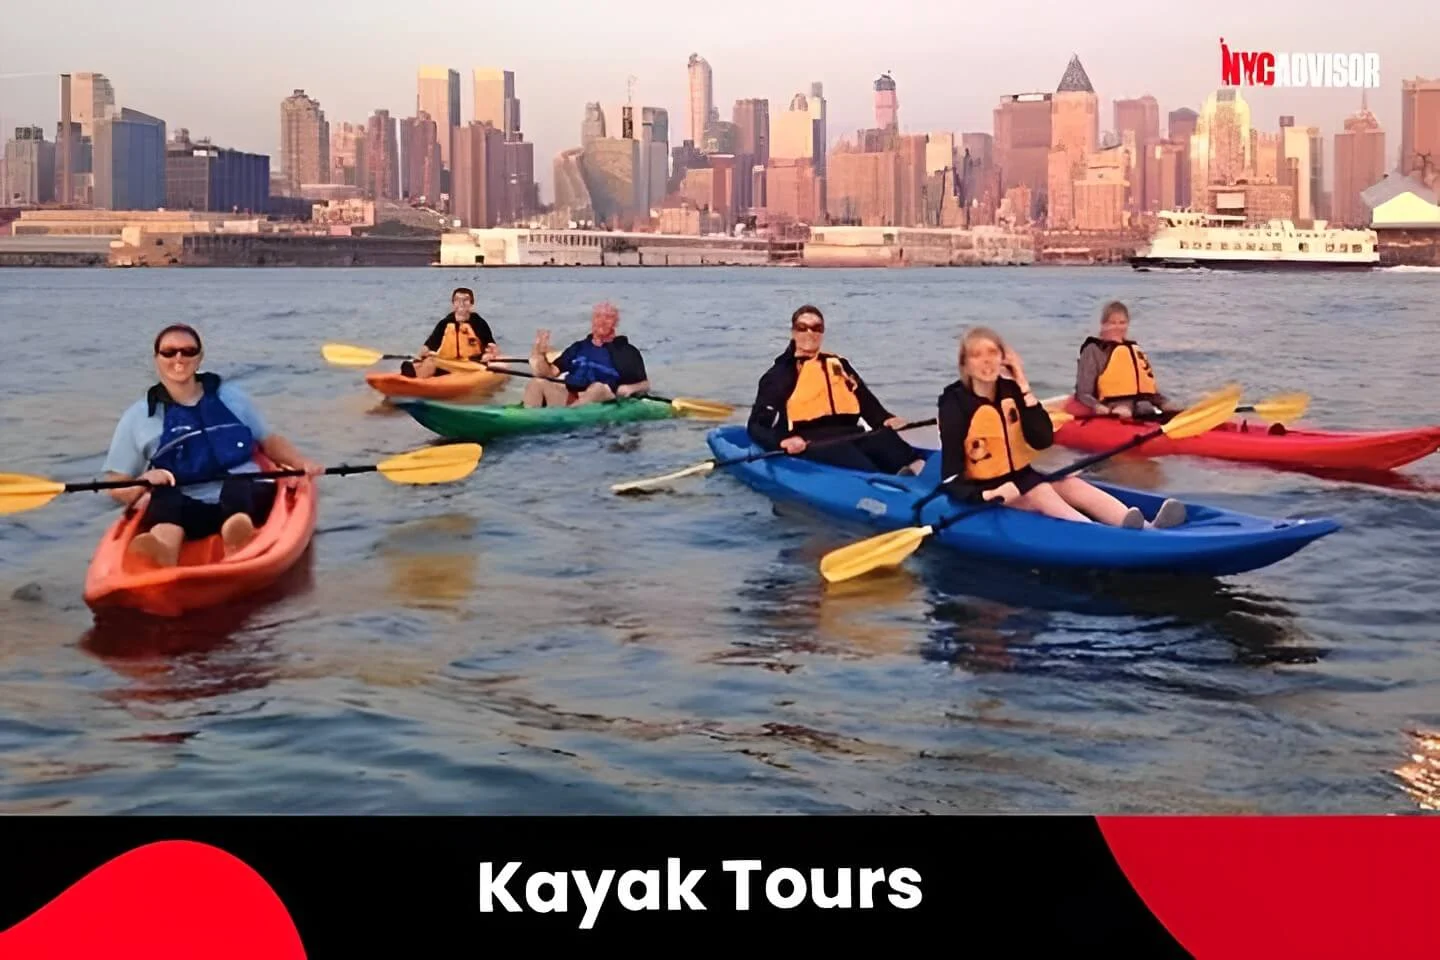 Kayak Tours NYC in July